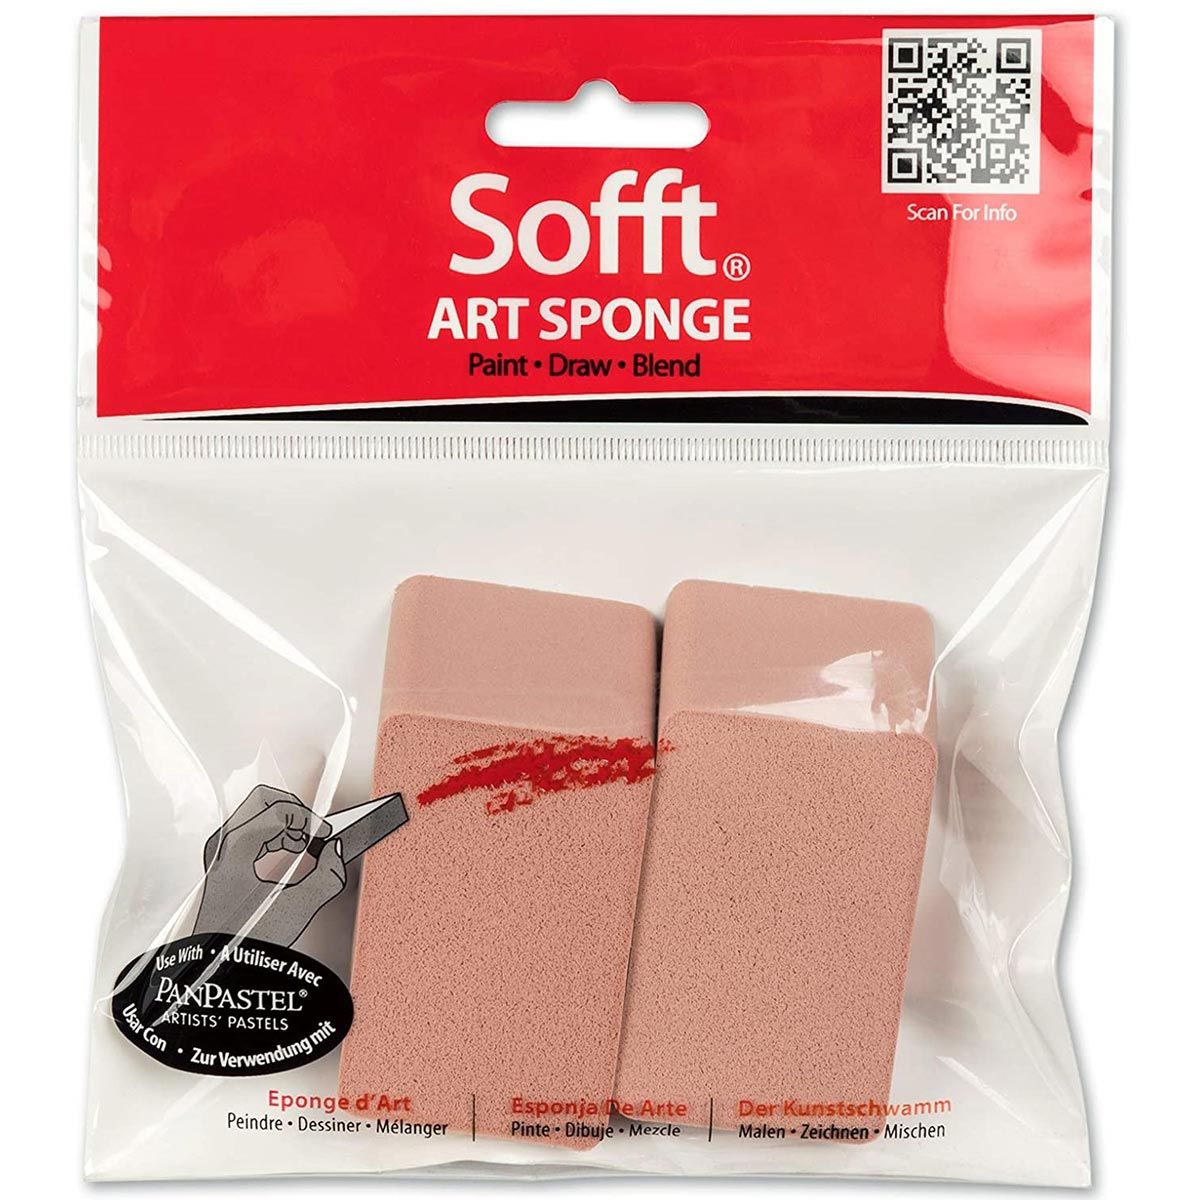 Sofft Tool Art Sponge Angle Slice-Flat Pack of 2